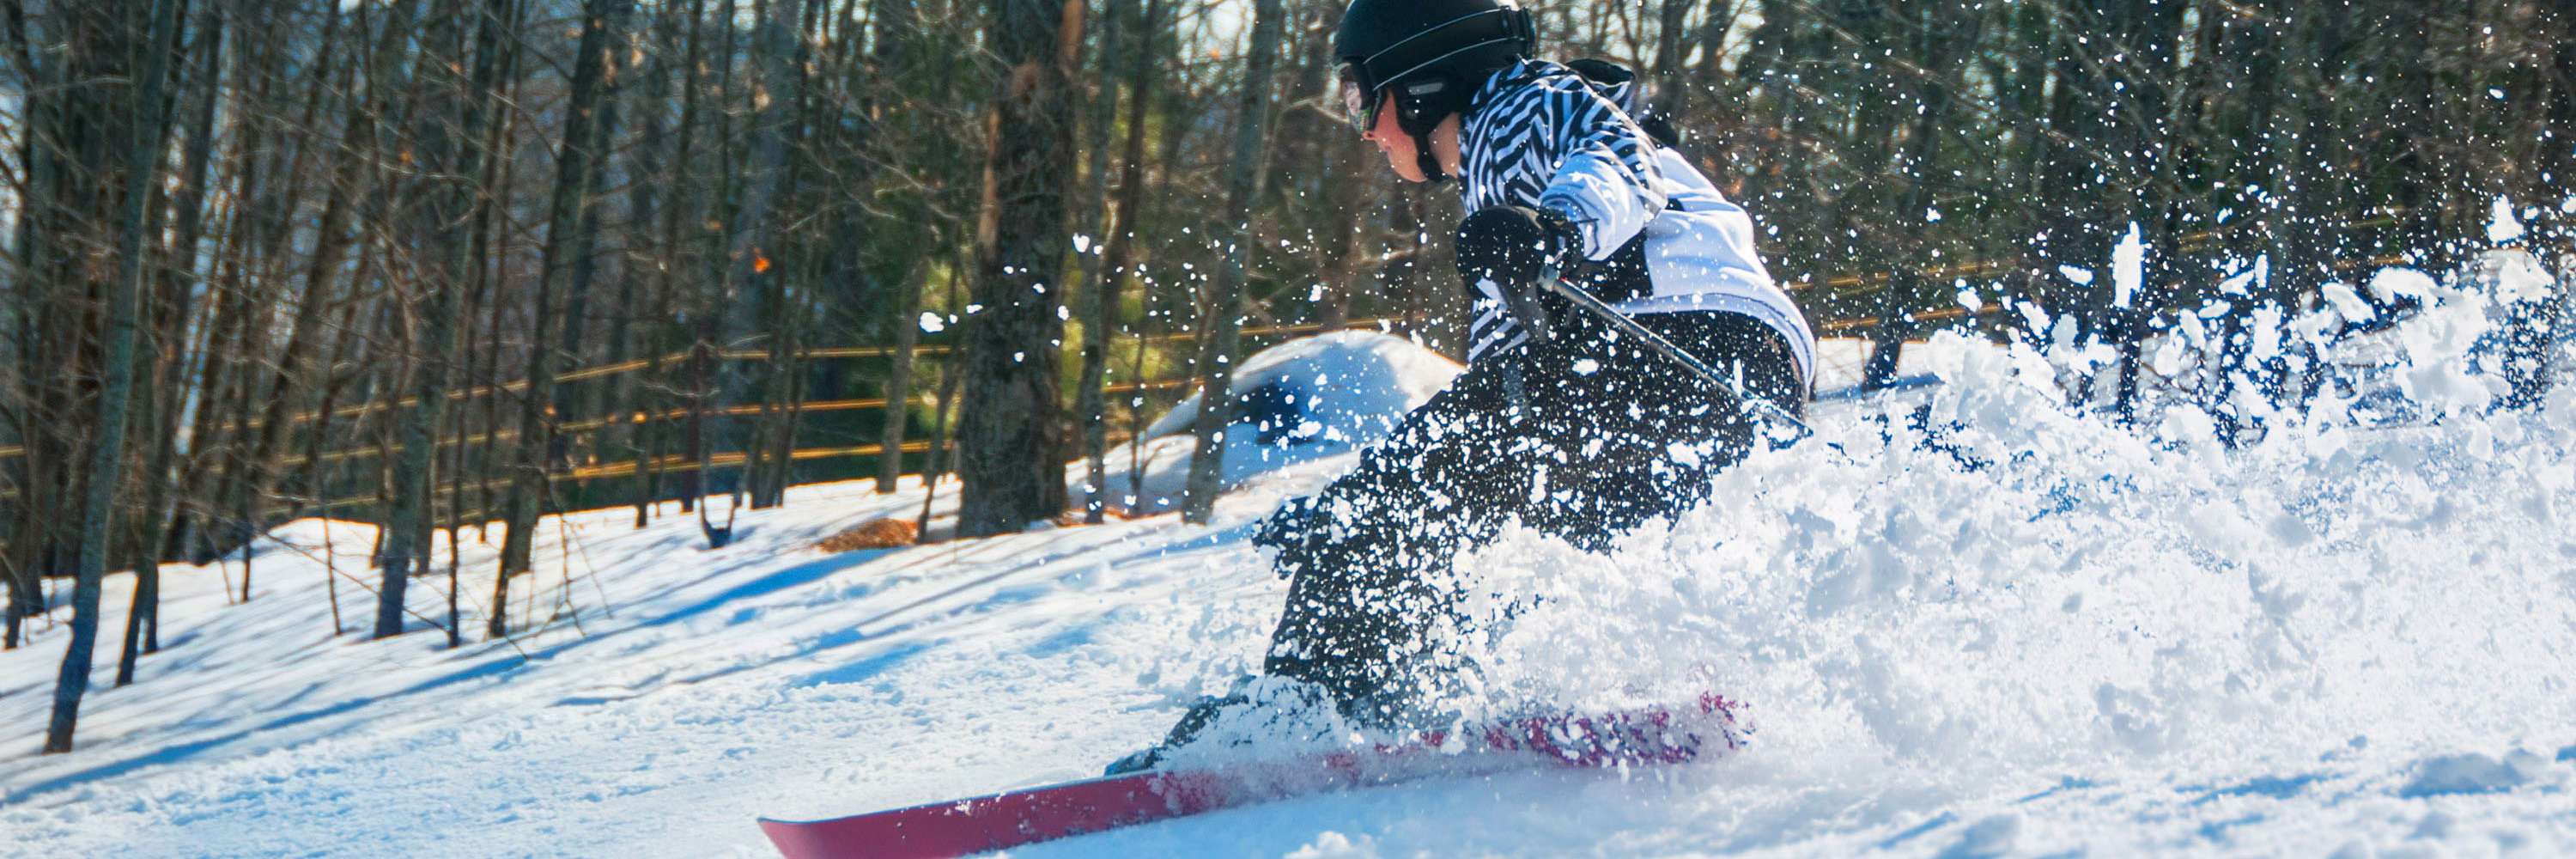 Skiing and Snowboarding | Michigan